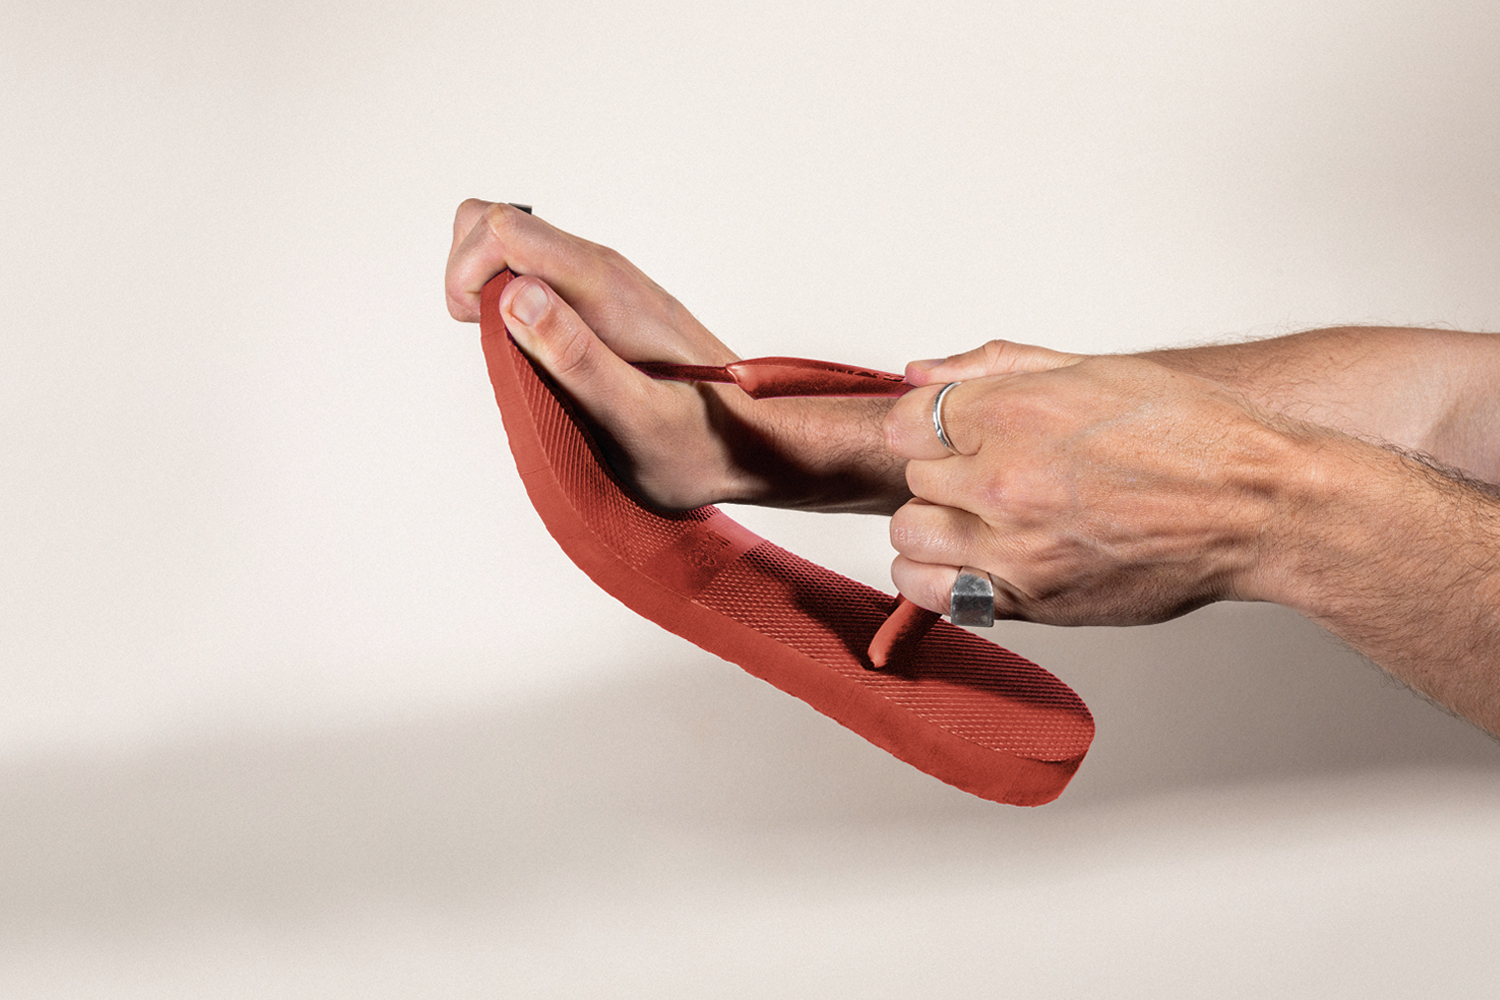 Thongs Australia has sold more than 50k pairs of Australian-made